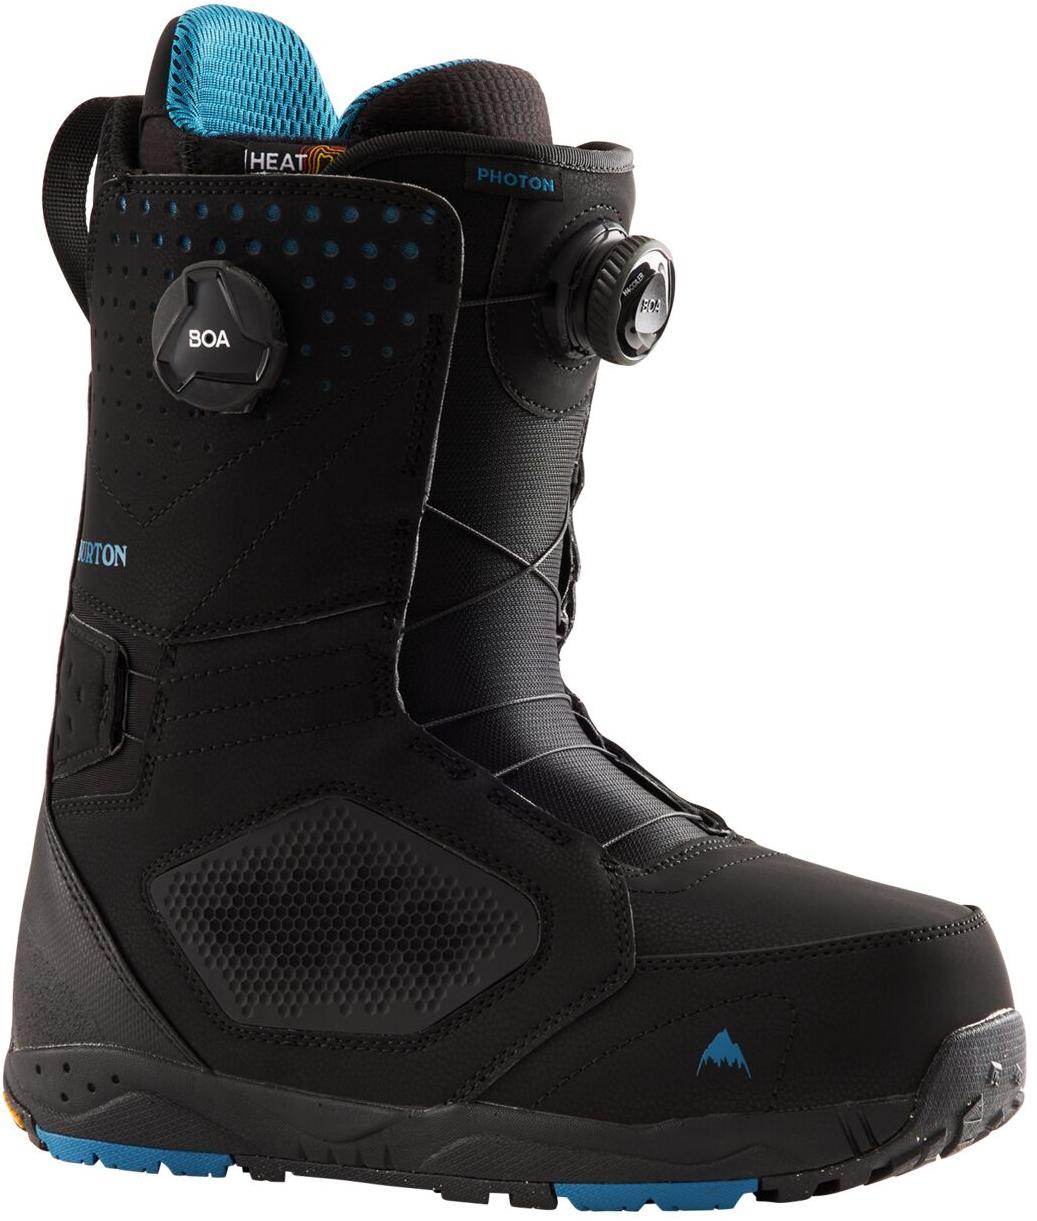 Ботинки для сноуборда BURTON 2021-22 Photon Boa Black